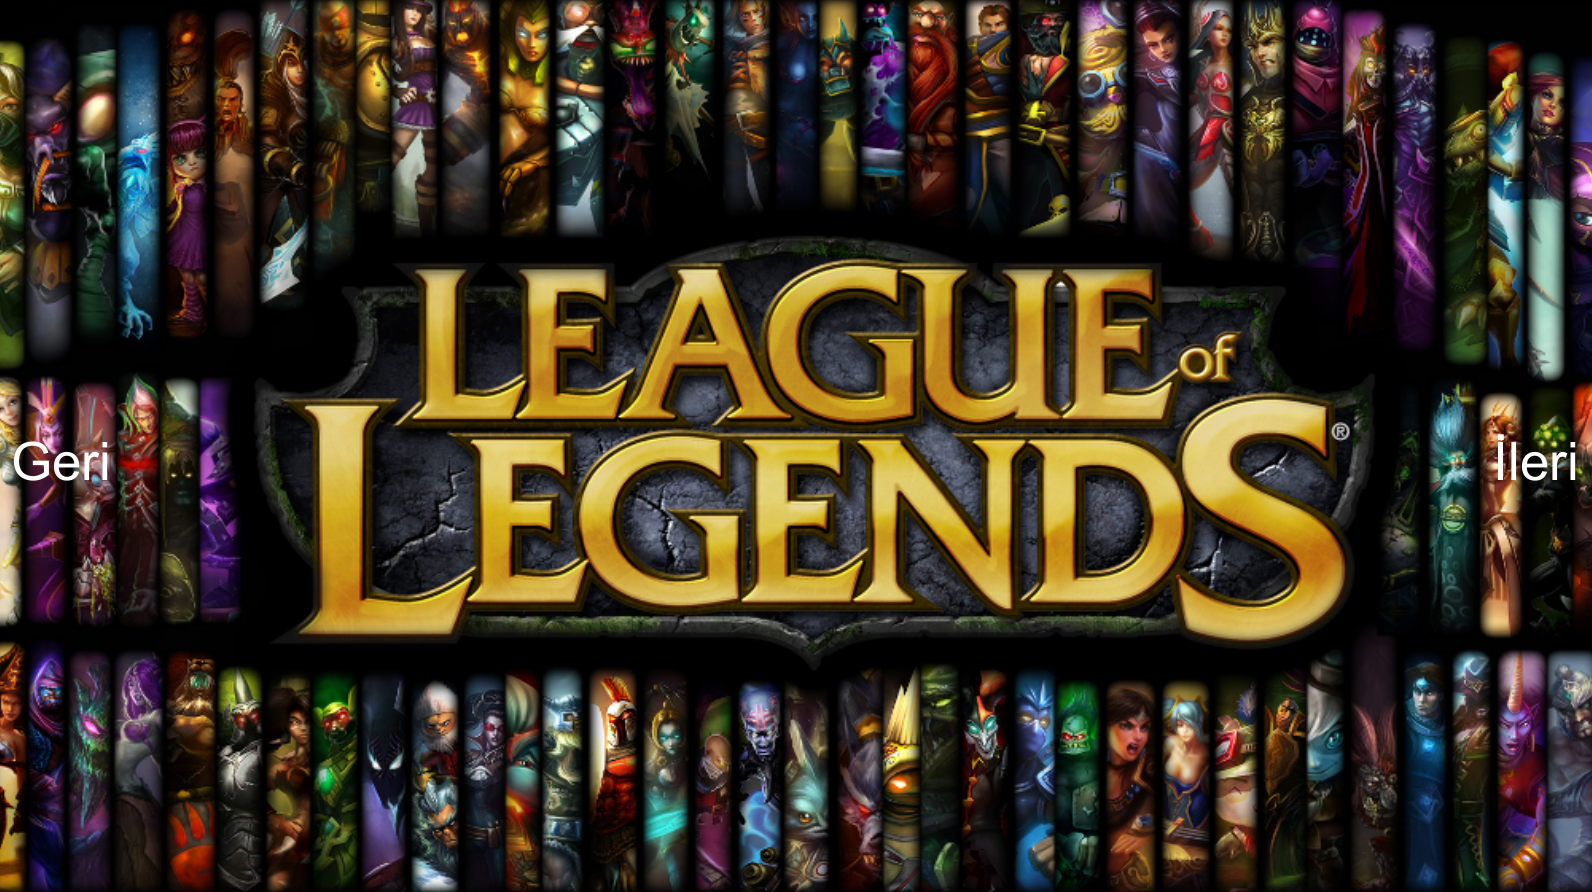 League of Legends Wallpaper HD APK Download - Free Media & Video